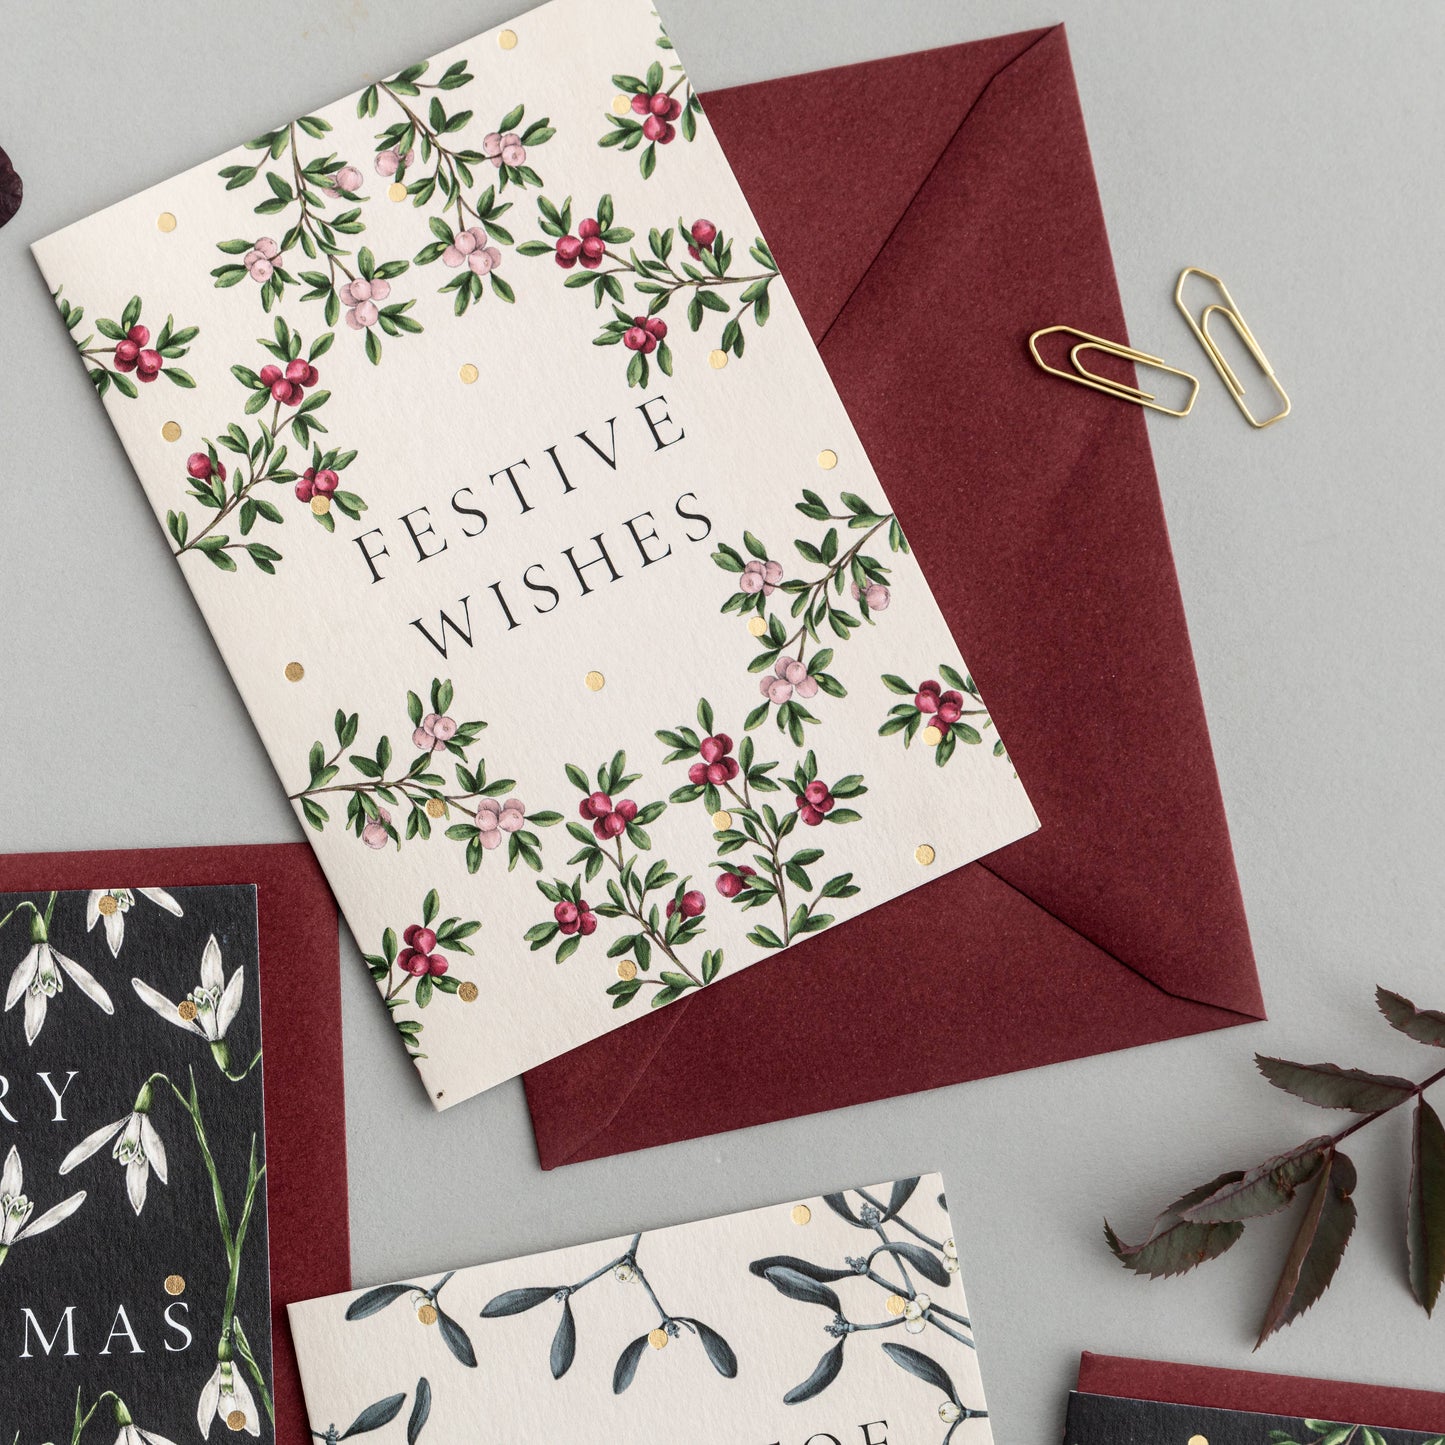 Merry Nouveau - Festive Wishes - Christmas Card